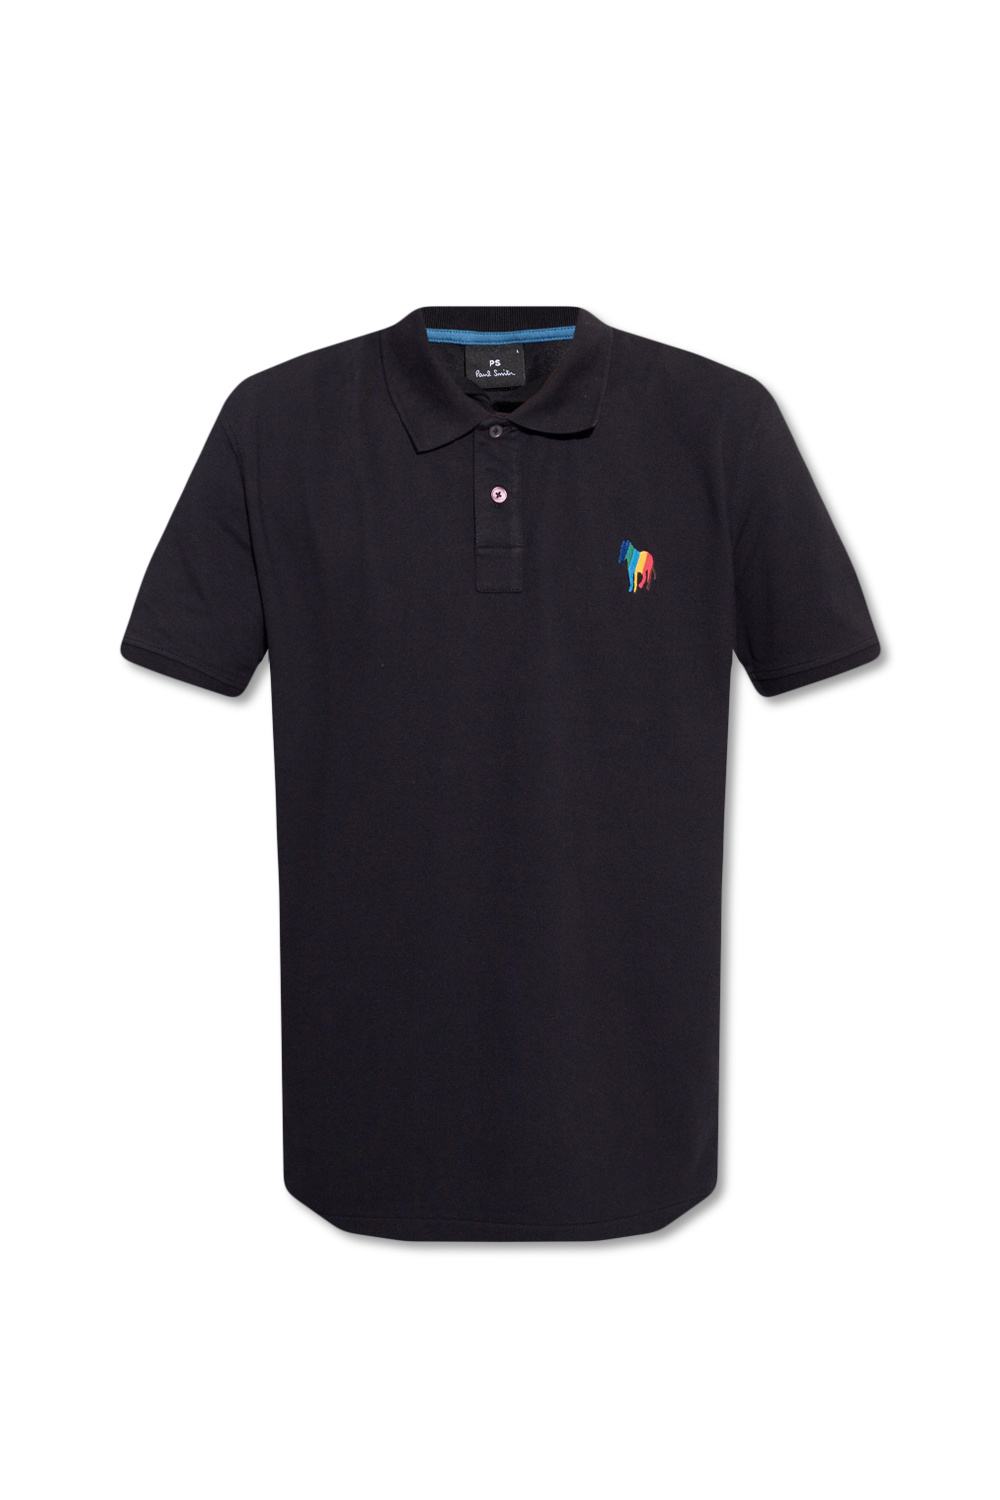 polo ralph lauren thorton iii multi color plaid mens Polo shirt with logo